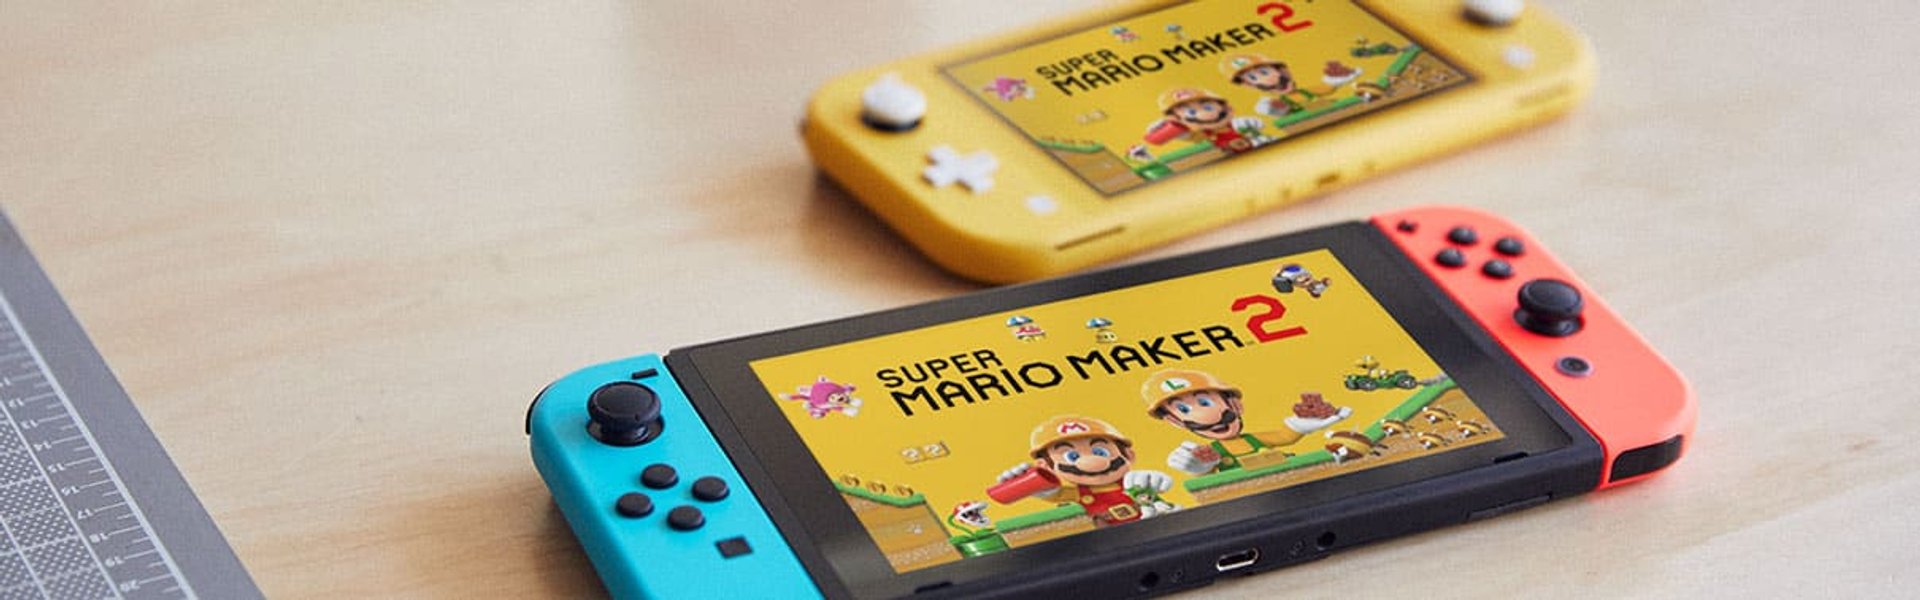 Konsole Nintendo Switch oraz Switch Lite z tapetami z Super Mario Maker 2